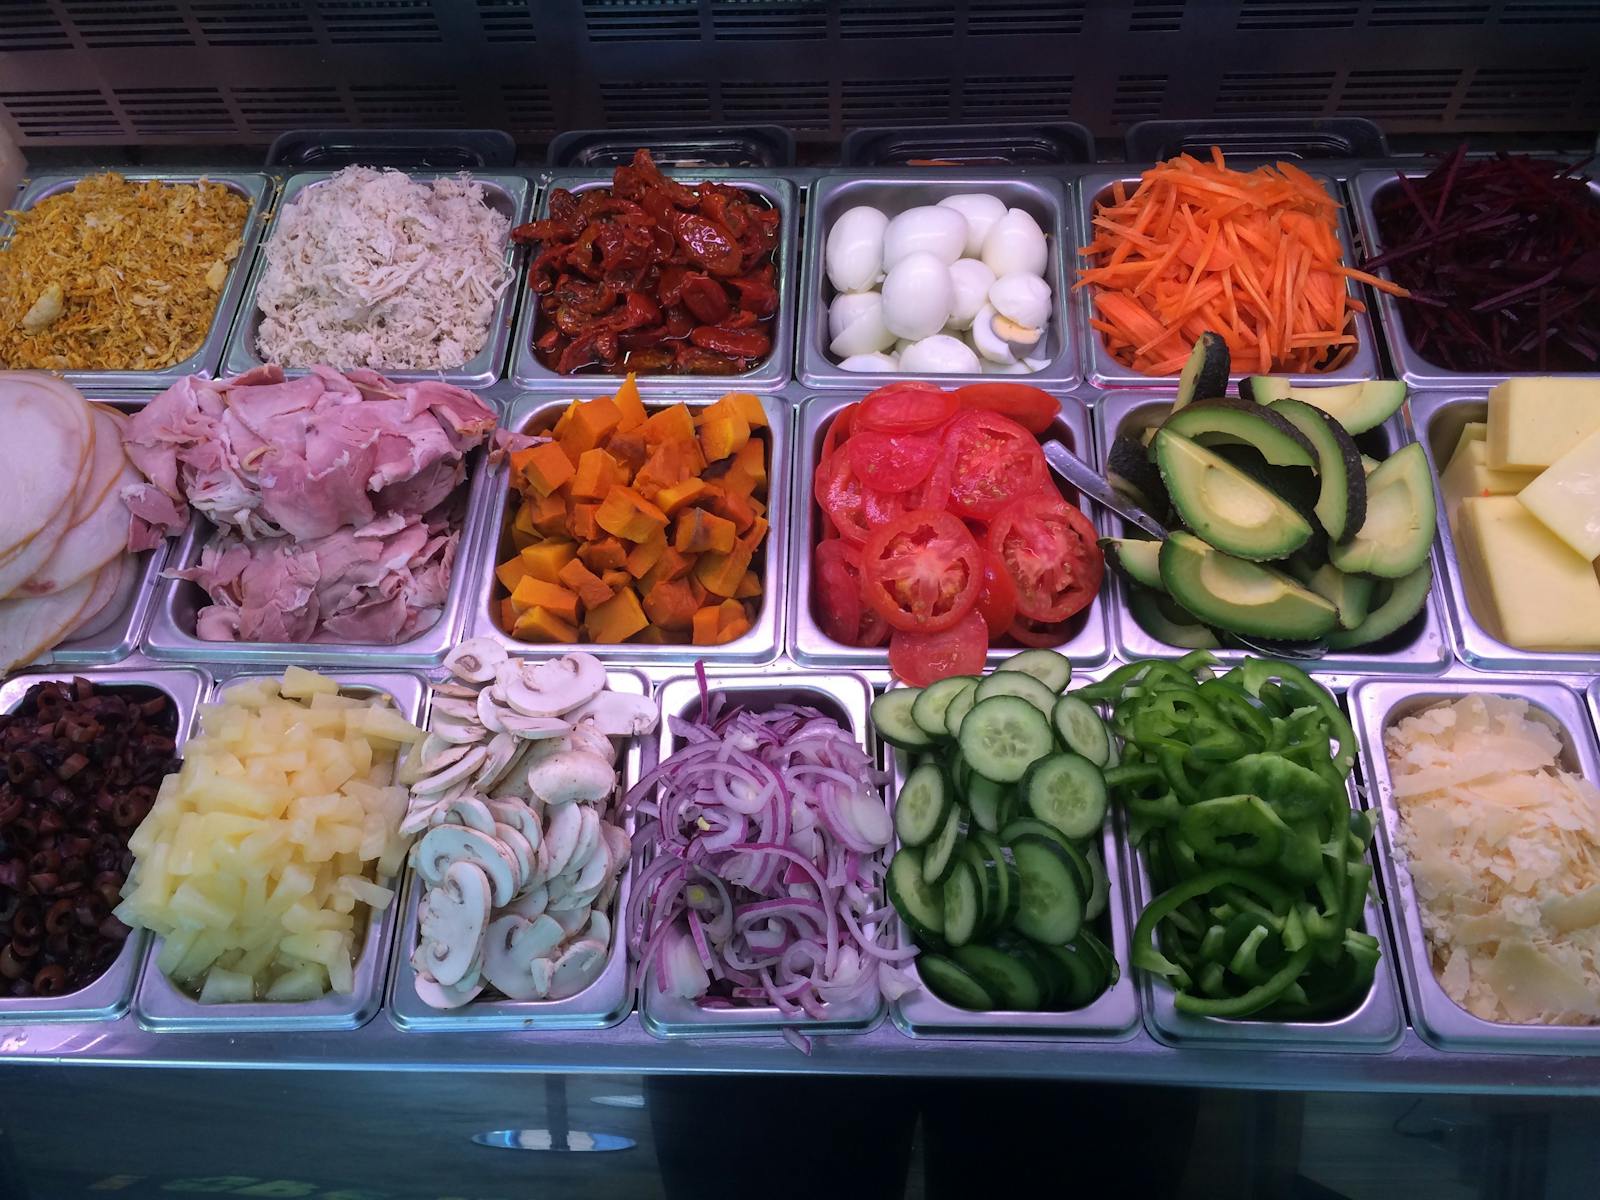 Salad bar showing fresh salad items